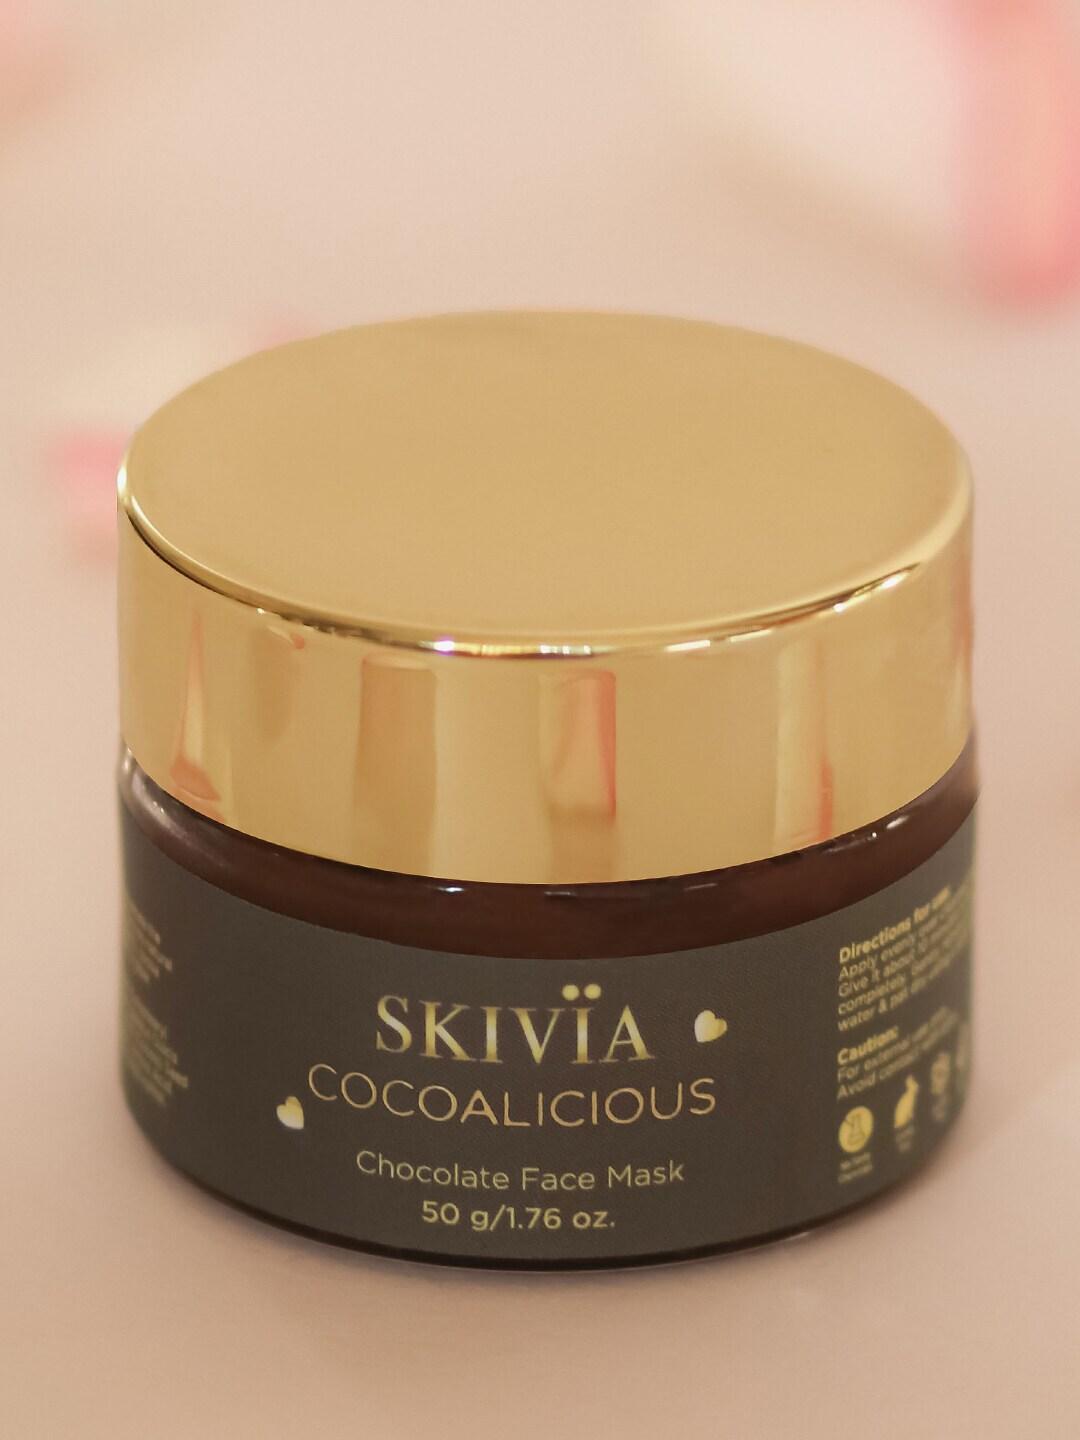 SKIVIA Cocoalicious Chocolate Face Mask with Theobroma Cacao & Niacinamide - 50g